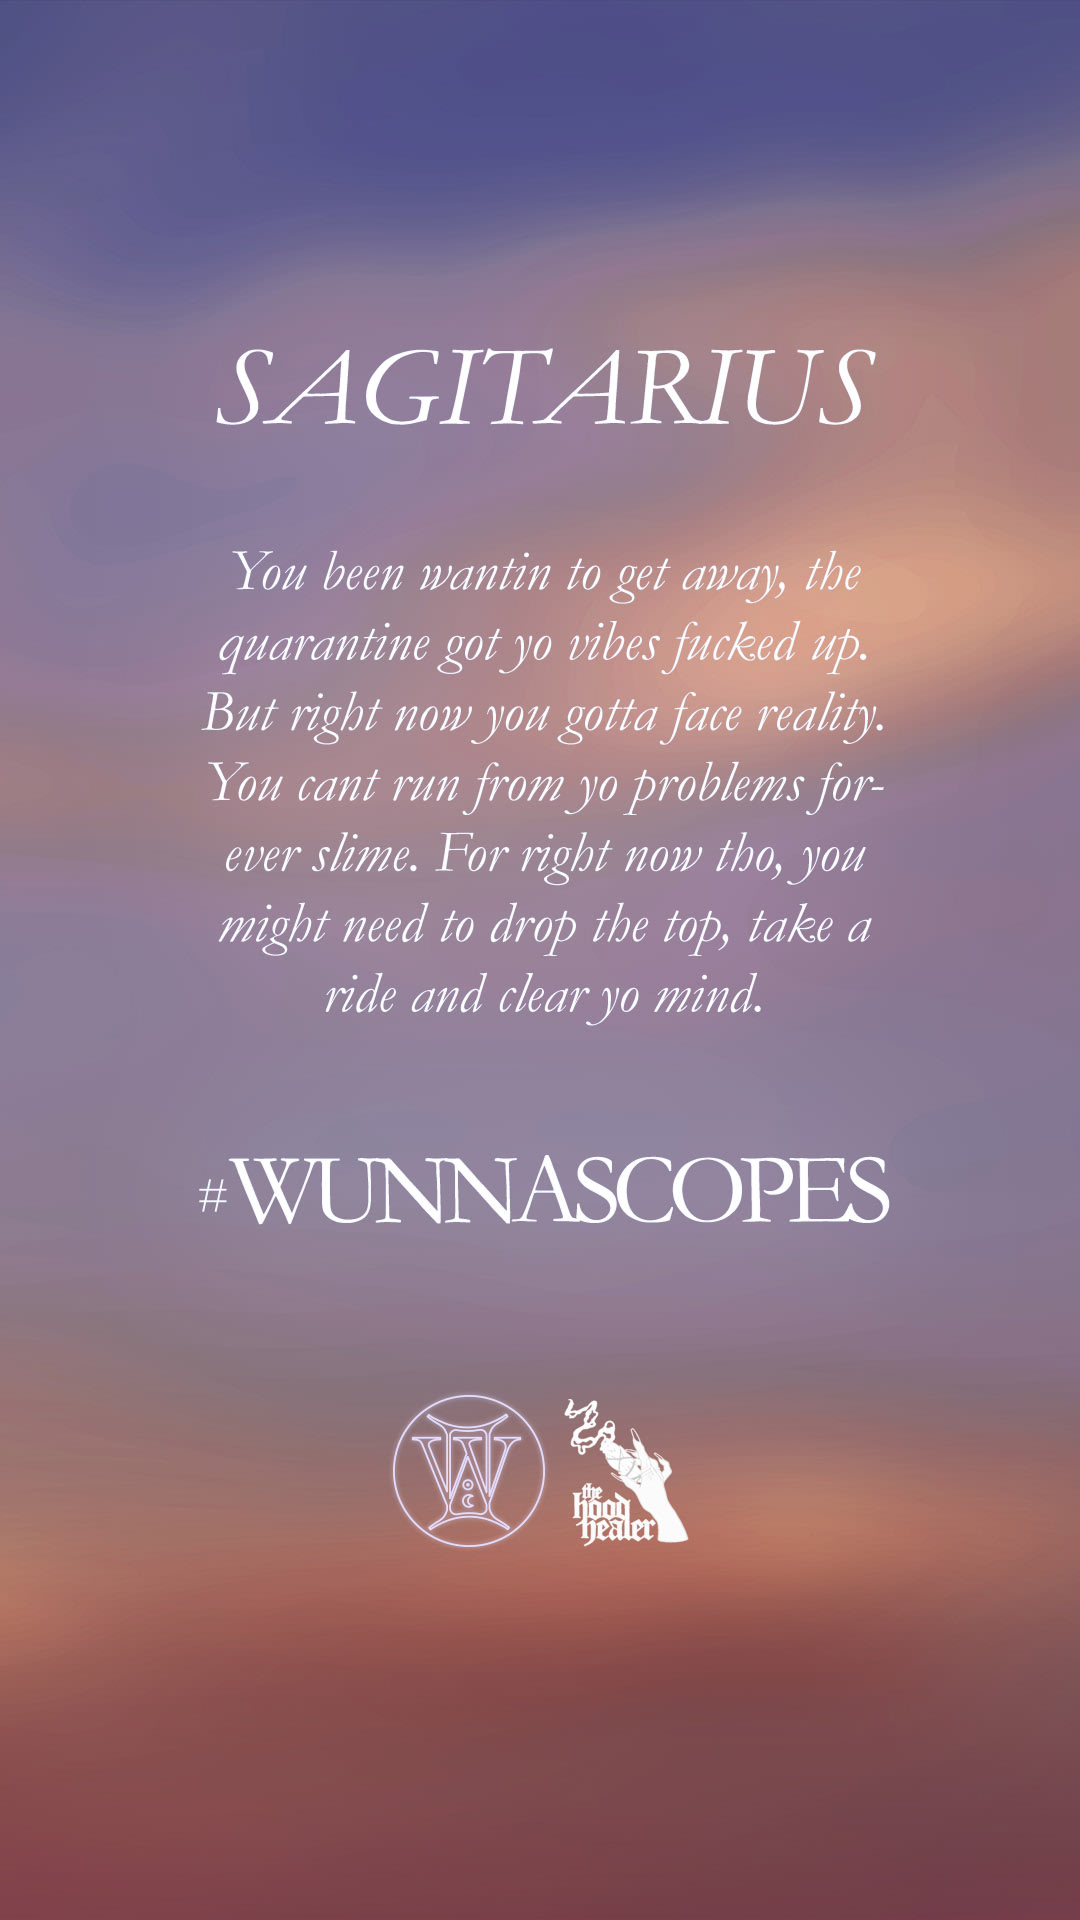 Wunnascope Sagittarius